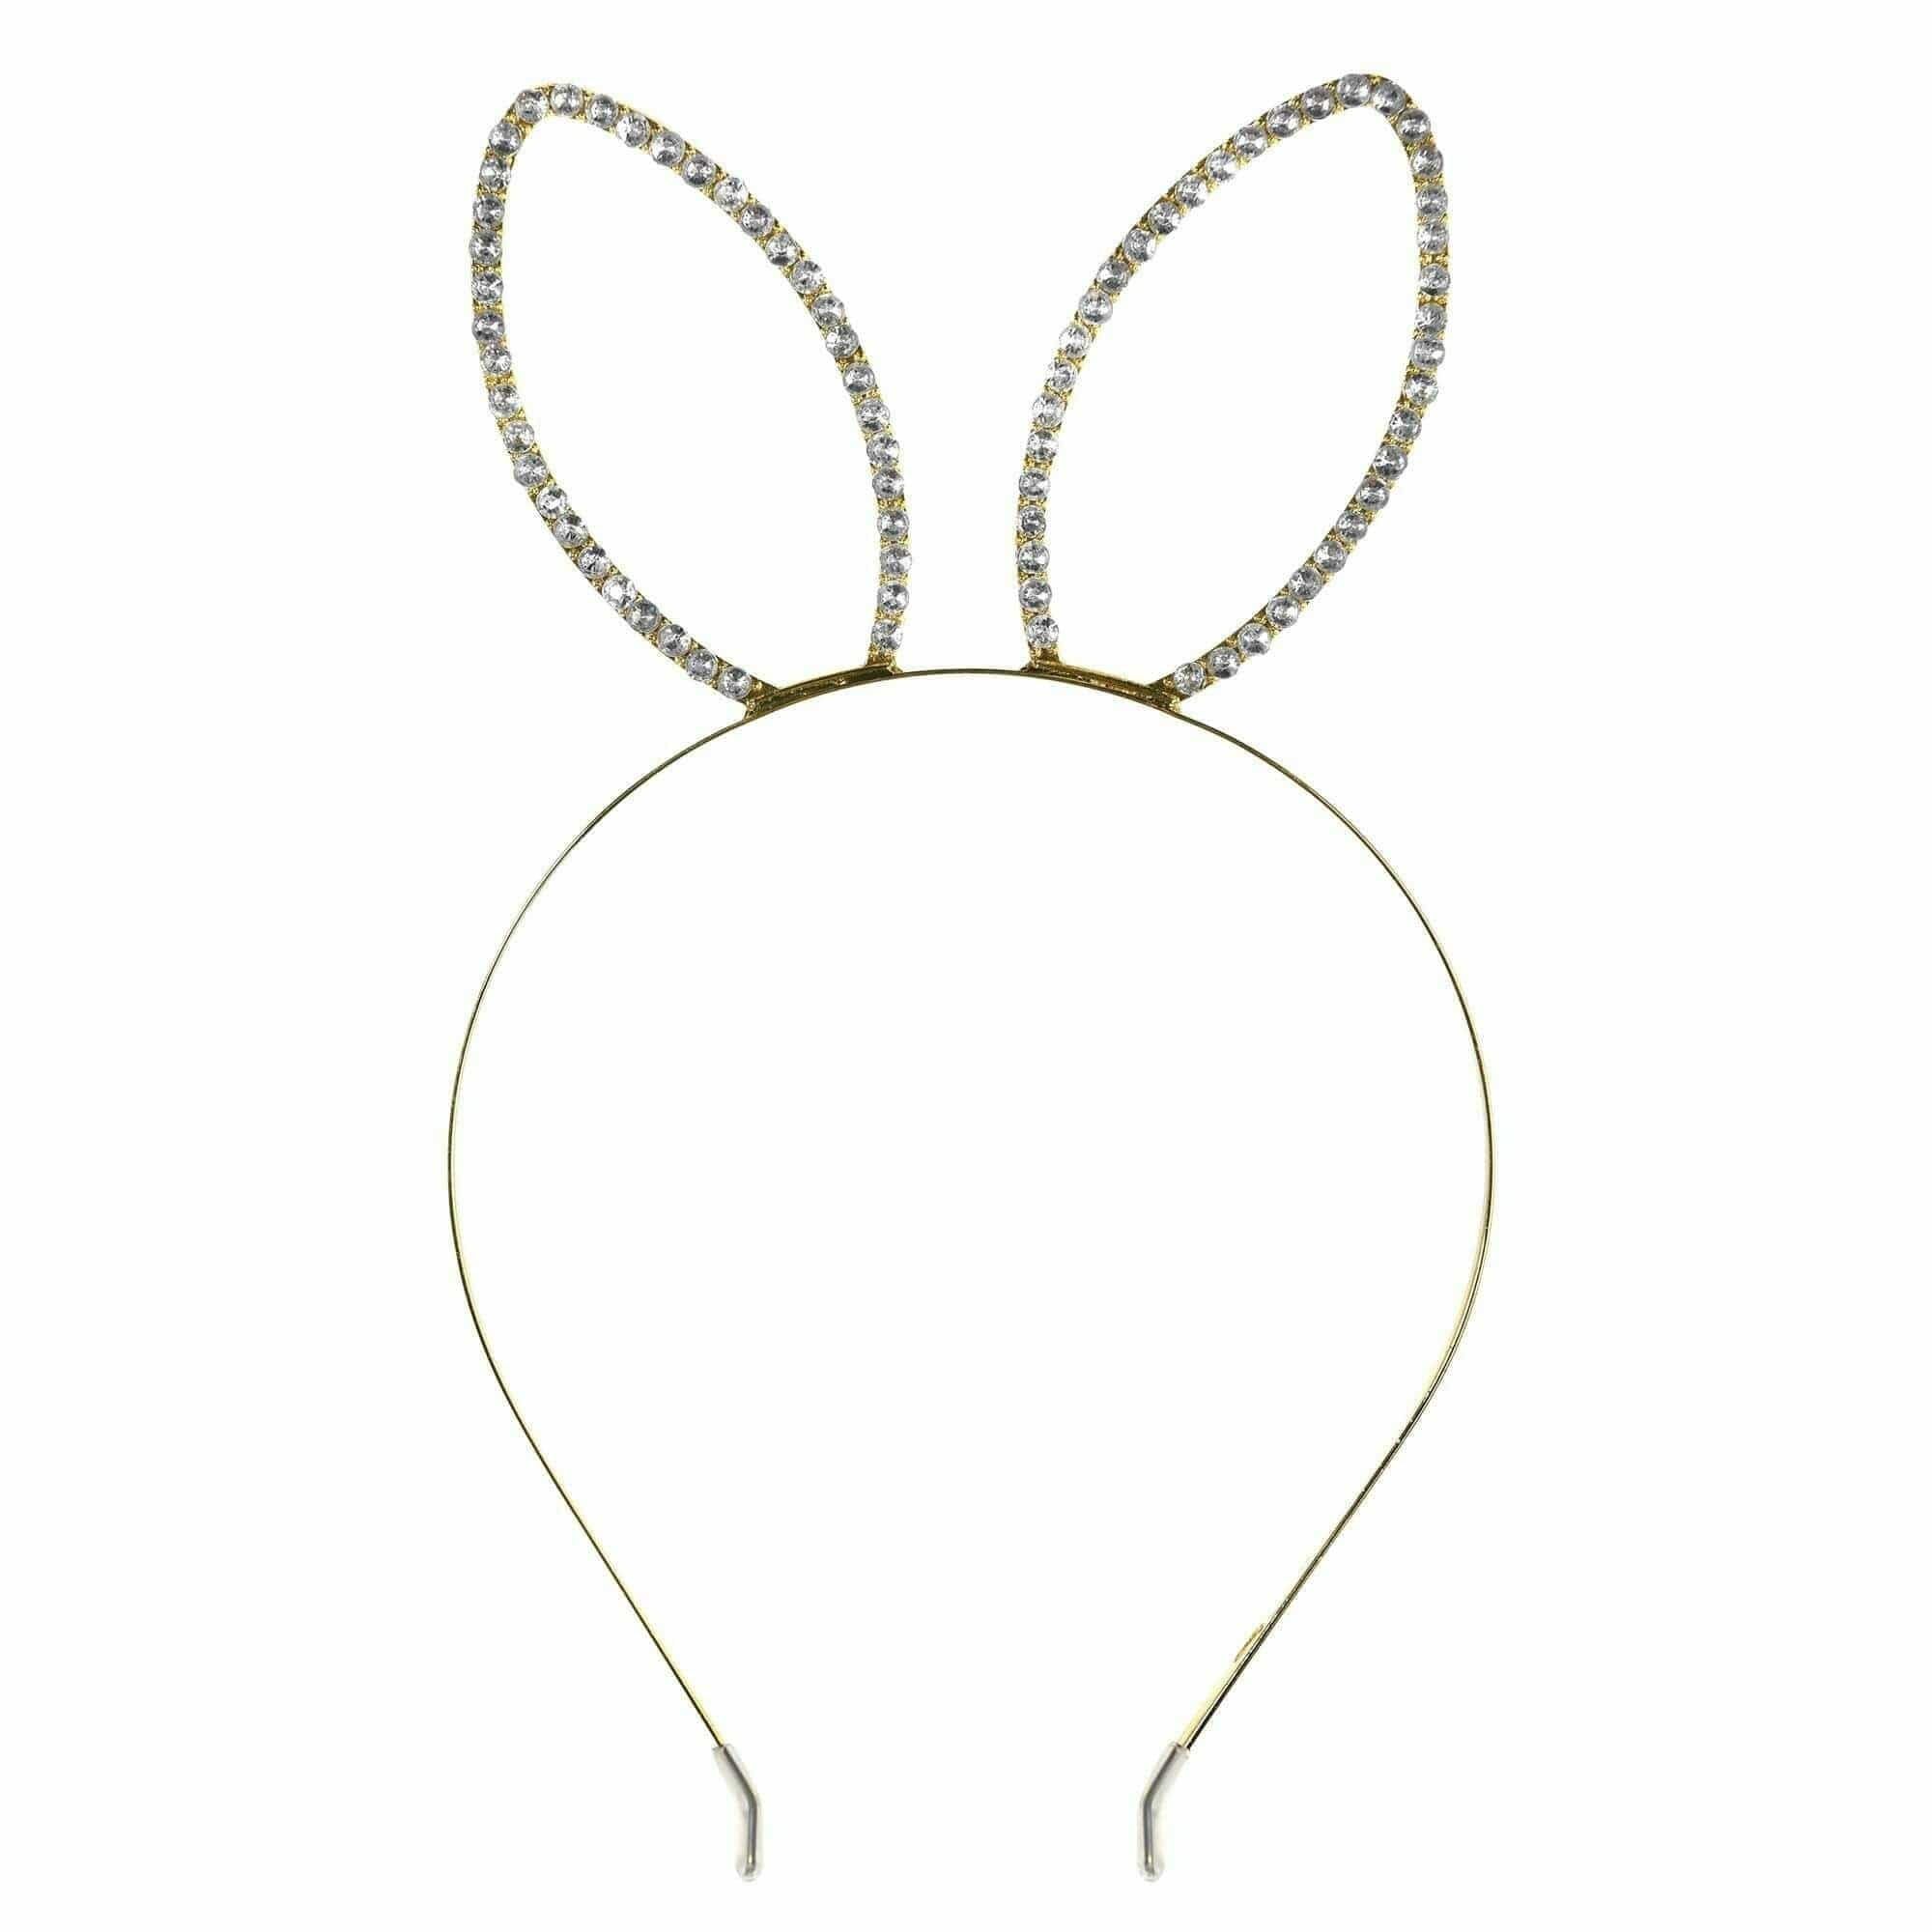 Amscan COSTUMES: ACCESSORIES Bunny Metal Ears Headband